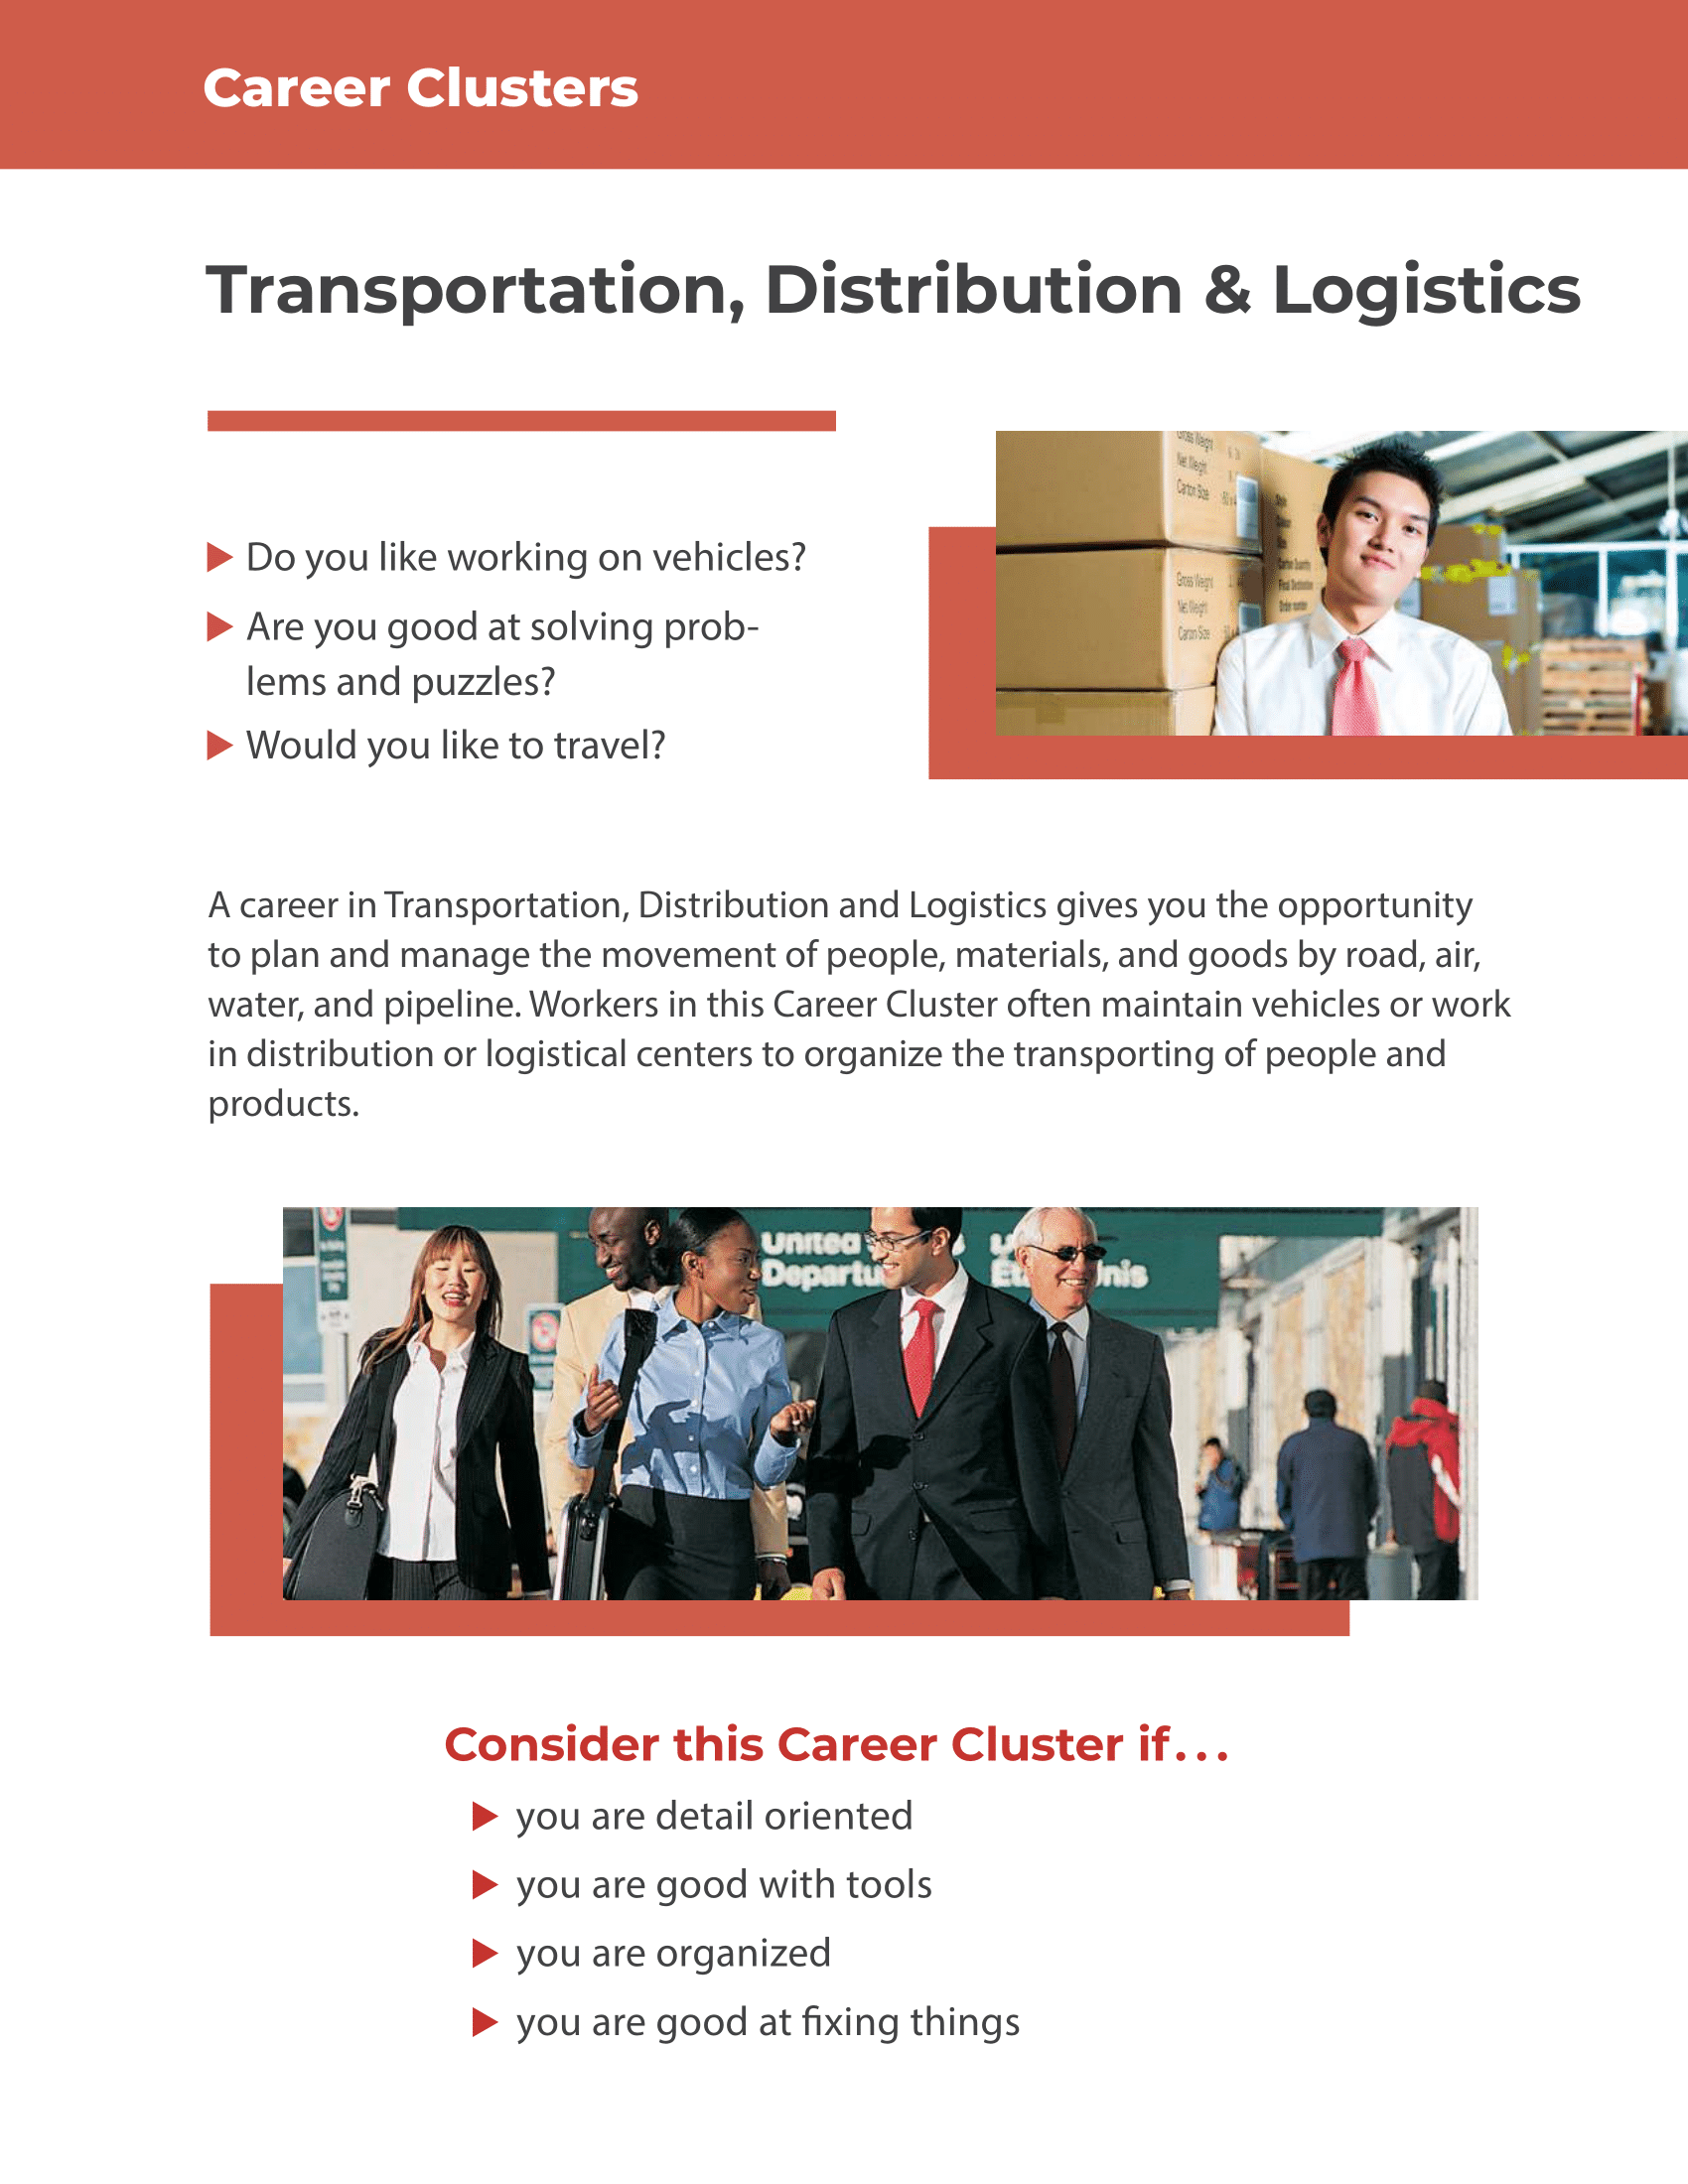 Career Clusters -Transportation, Distribution, and Logistics